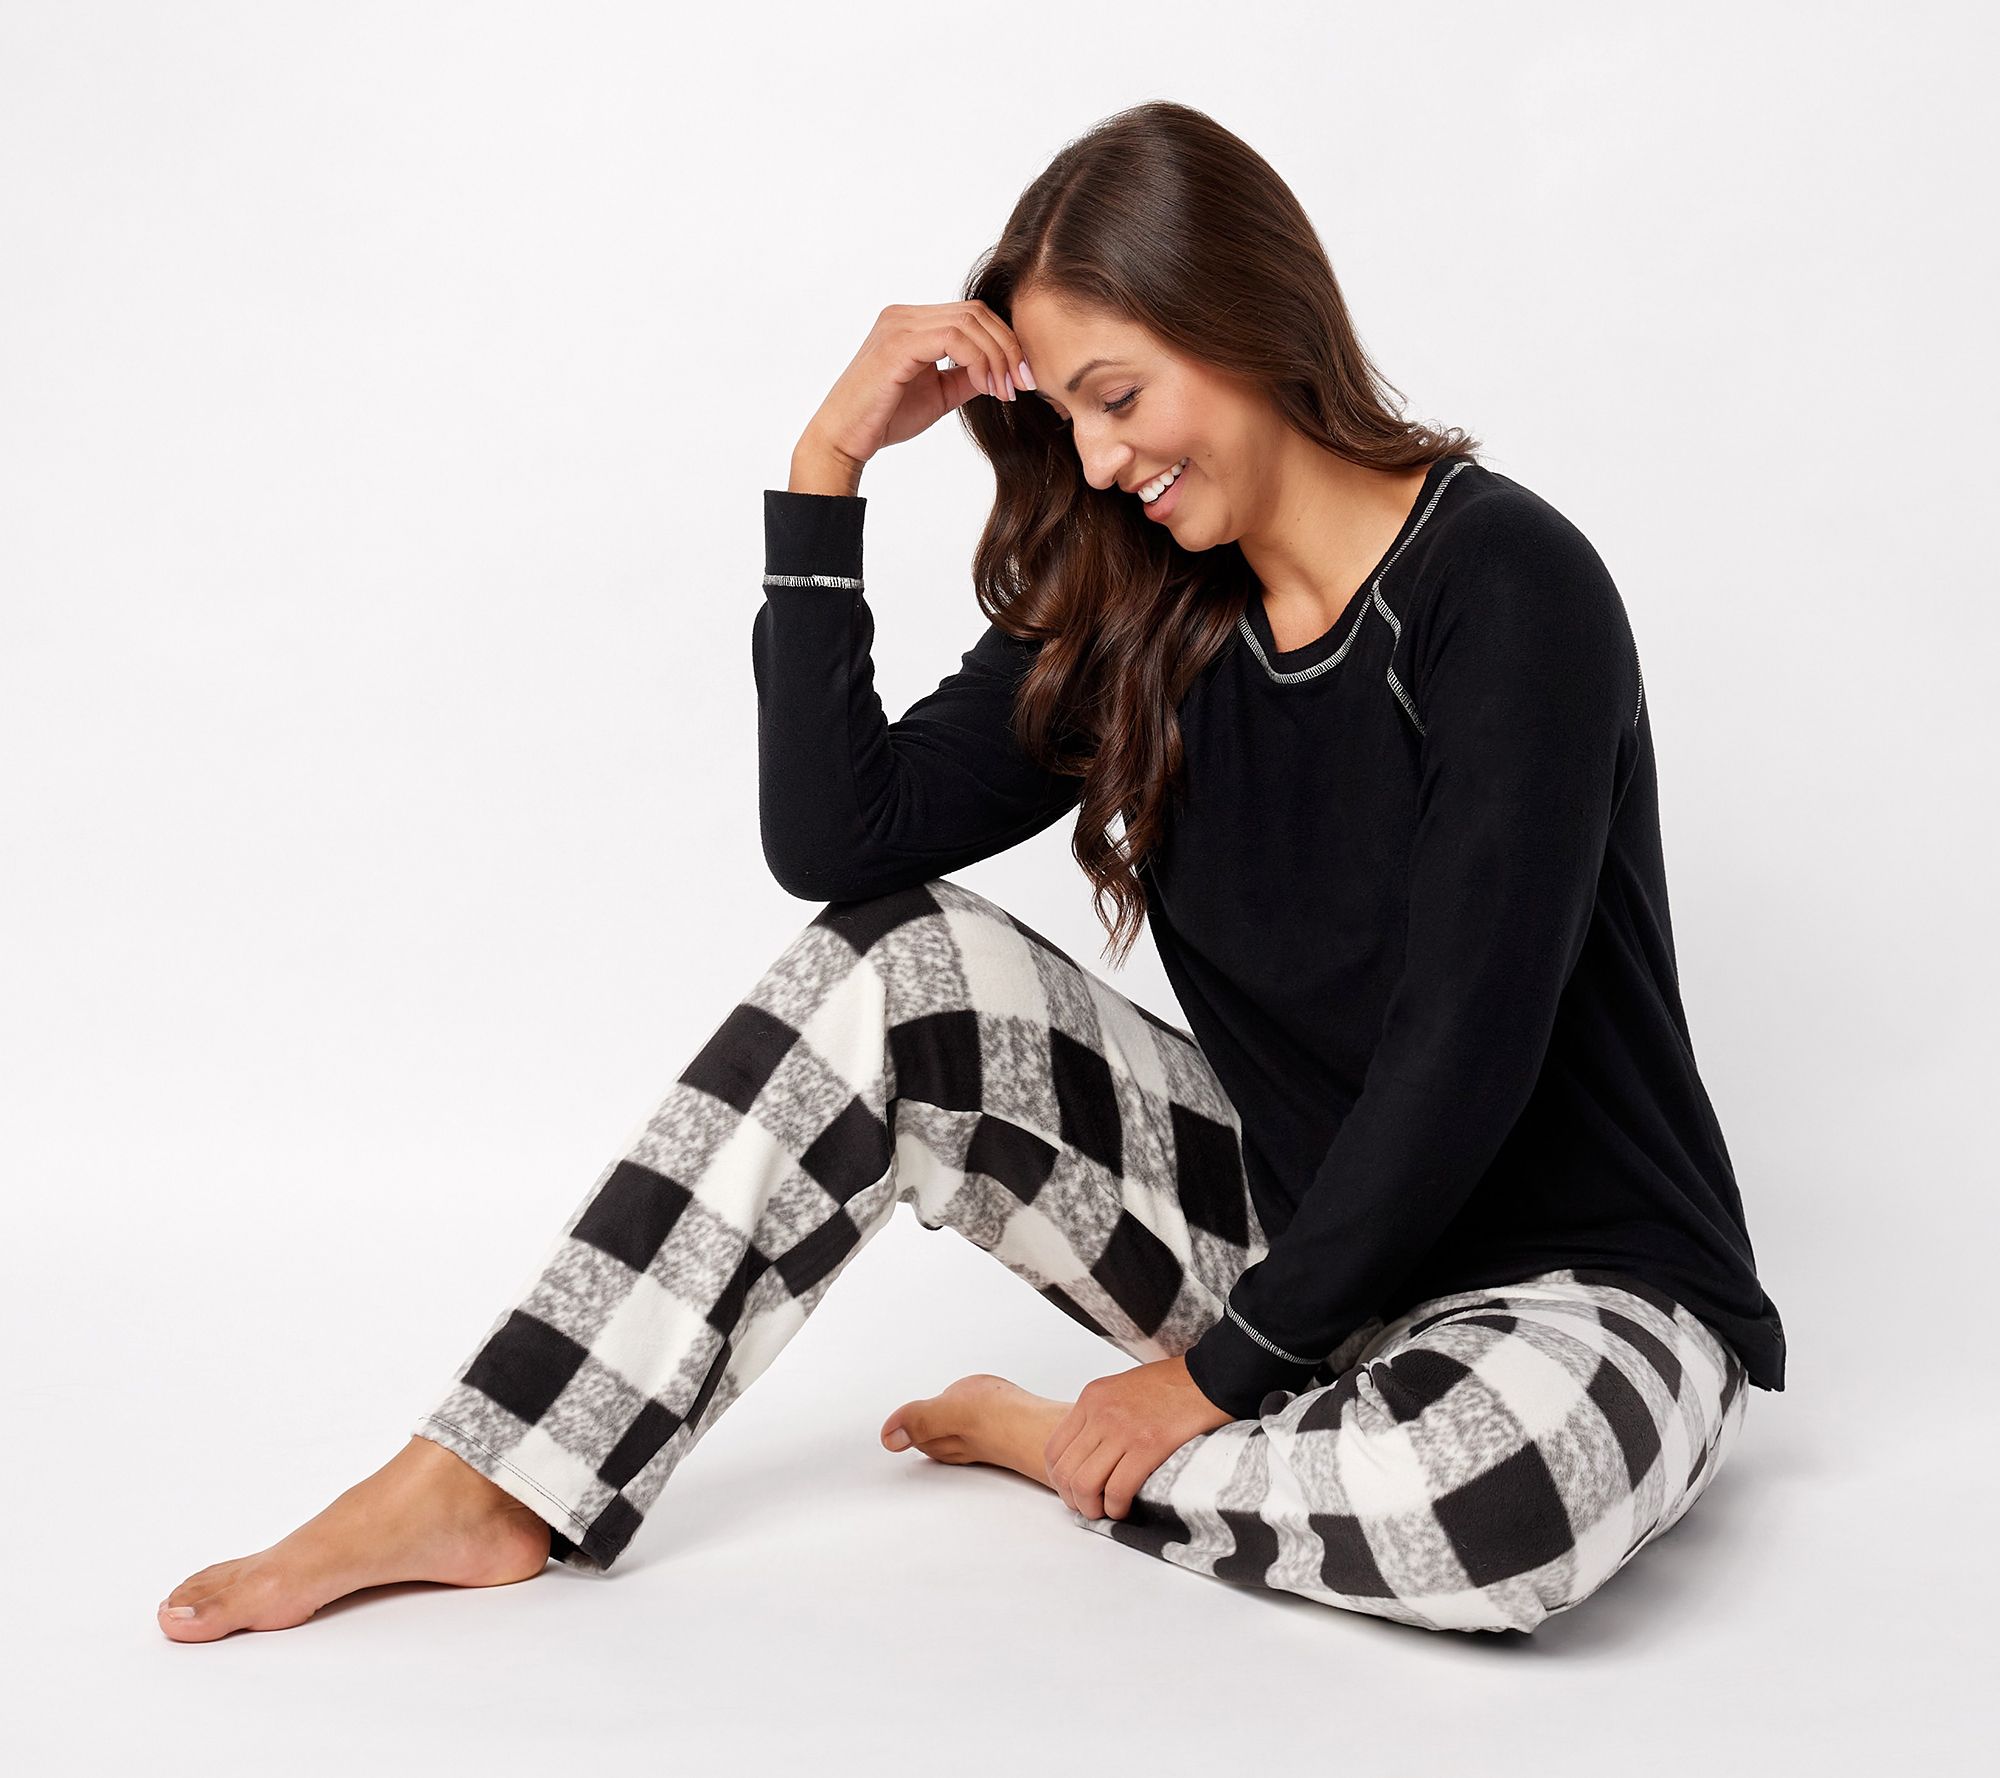 Plus Size Cuddl Duds® Microfleece Pajama Top, Pajama Pants & Socks Set